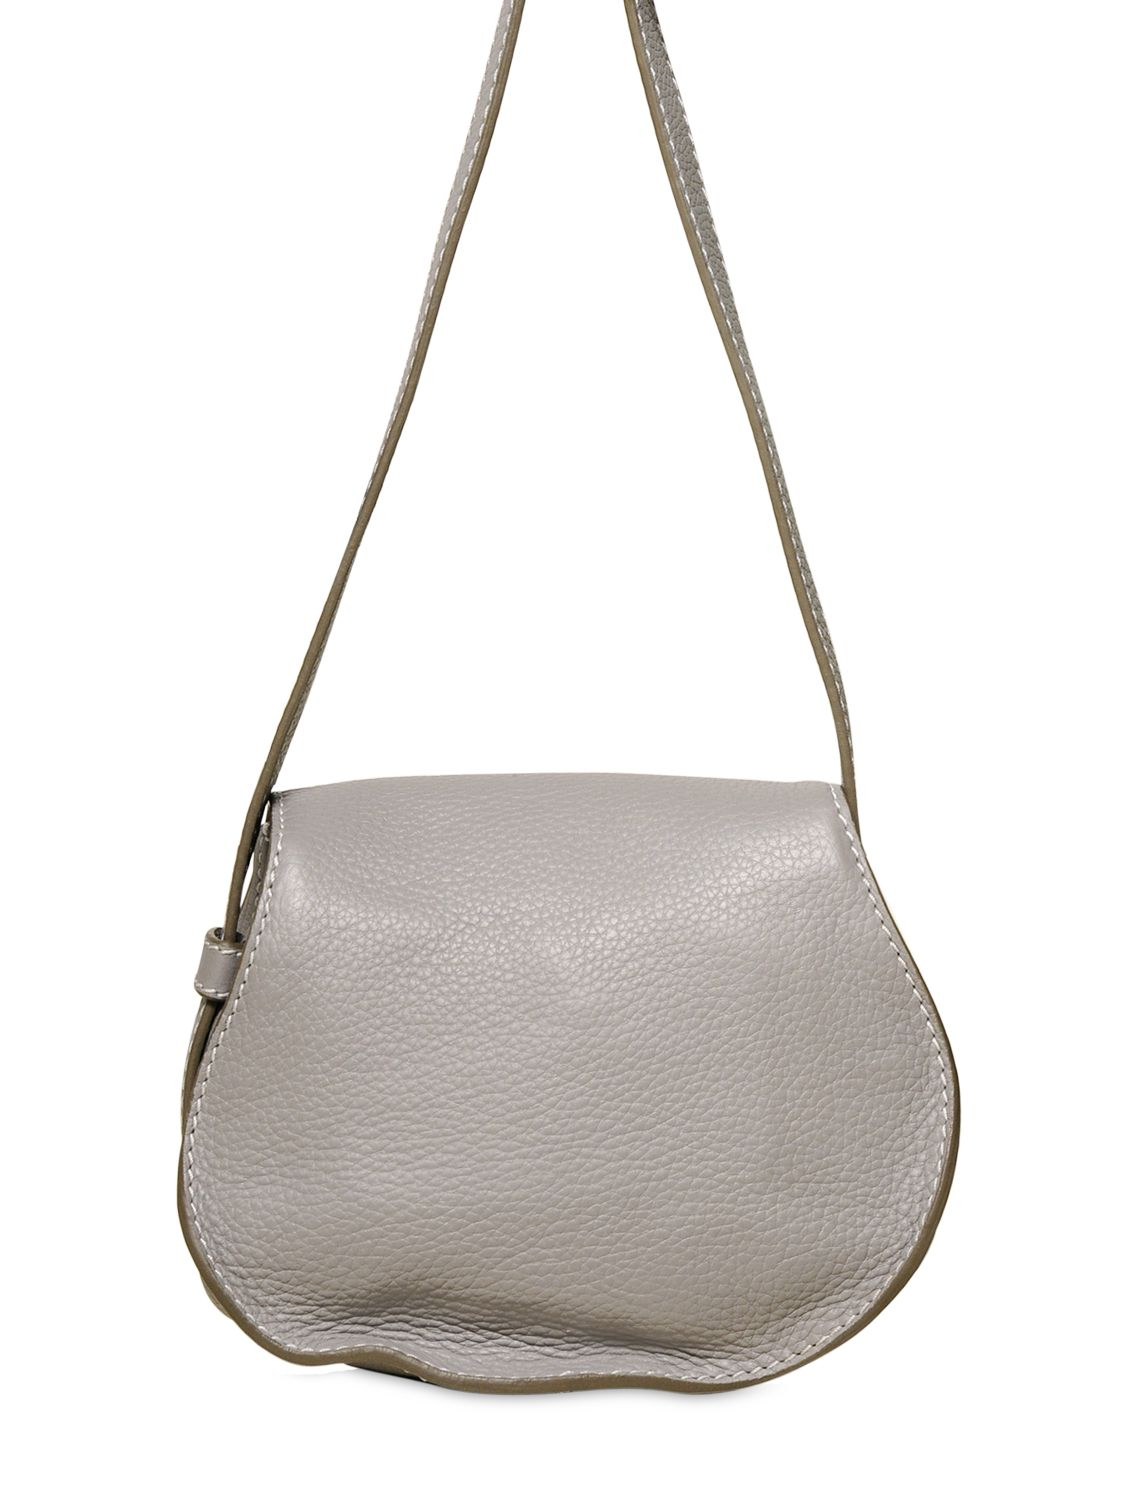 Chloé Small Marcie Leather Crossbody Bag in Gray - Lyst